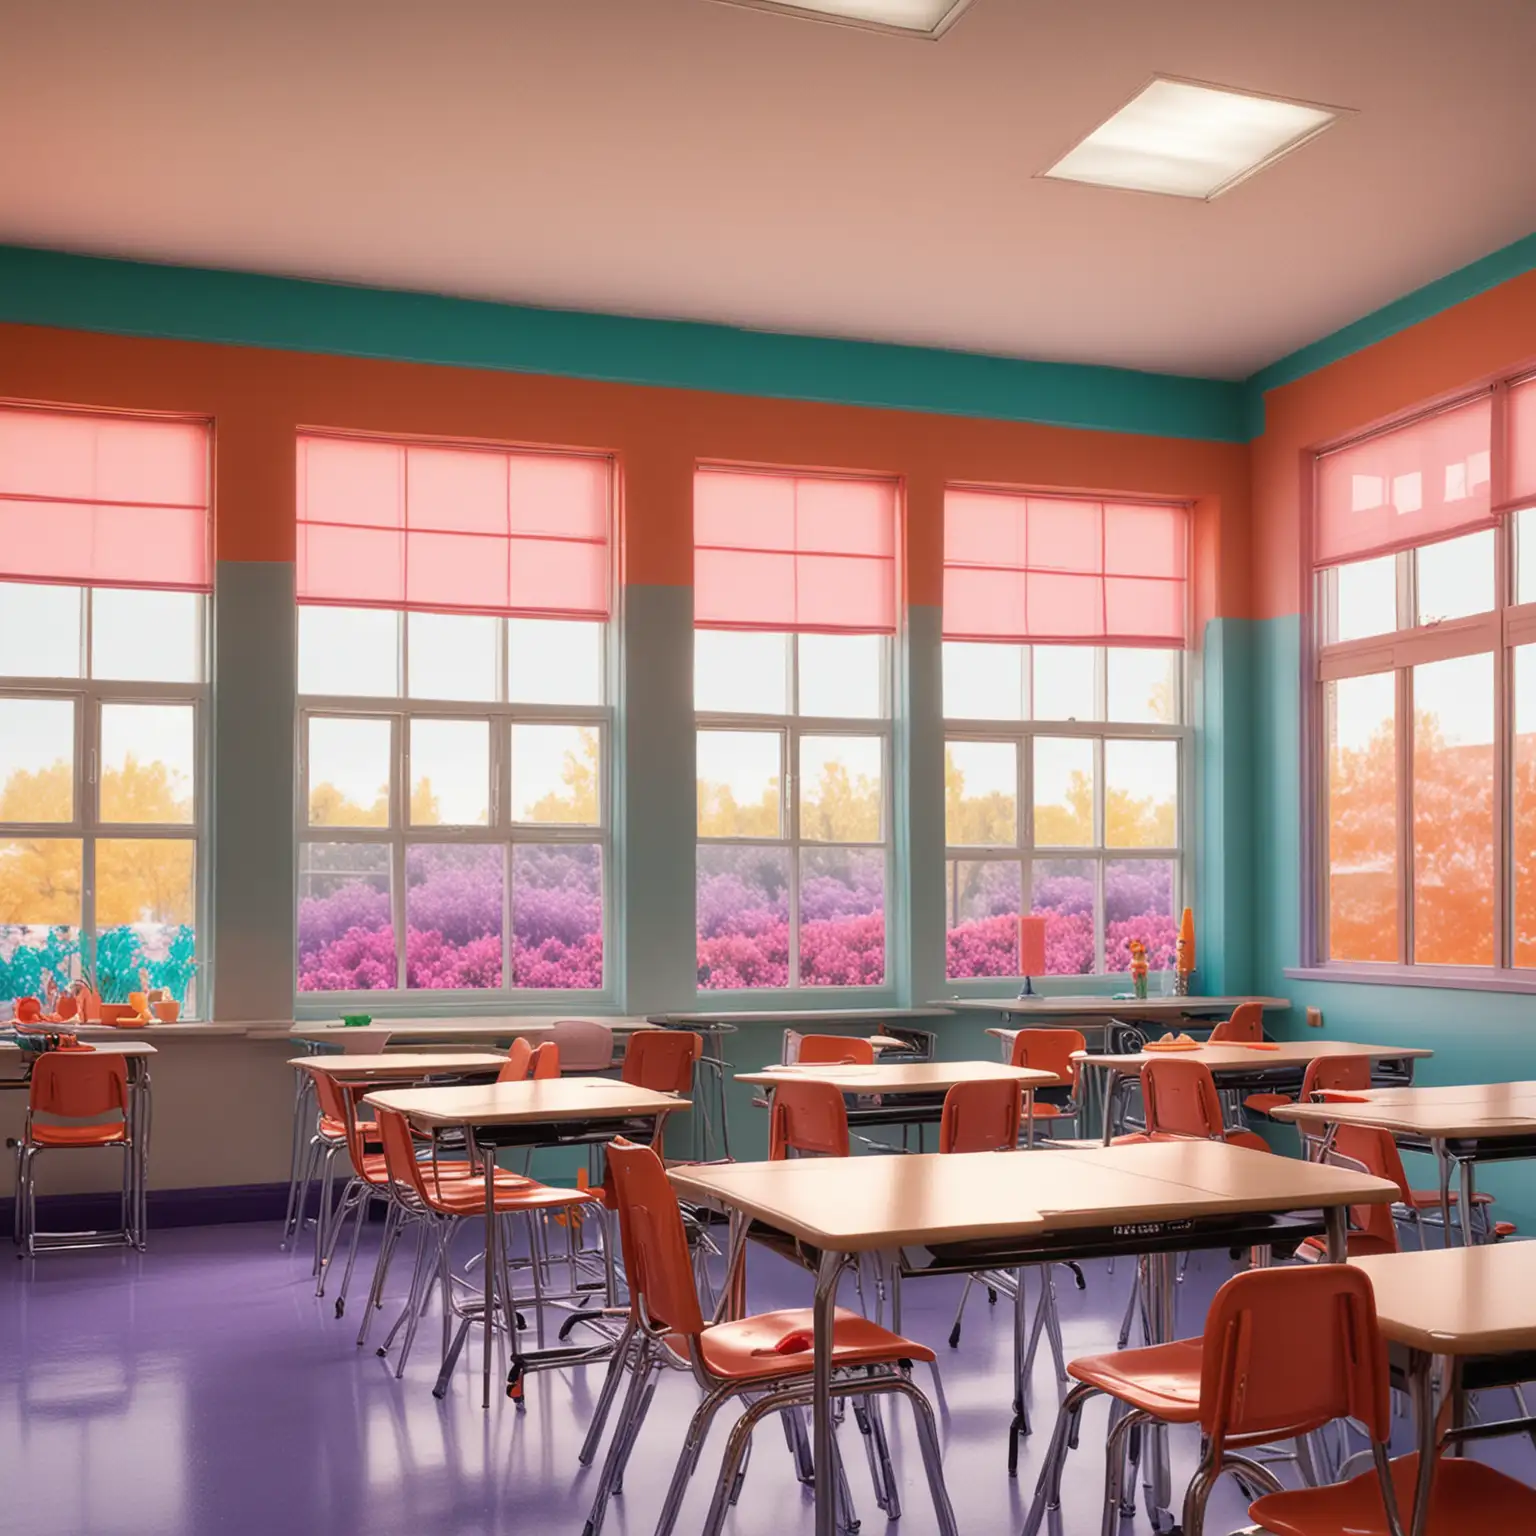 vibrant colorful classroom. midday sun shines through windows illuminating vibrant orange, pink, teal, and purple color scheme of the classroom decor-ar 2:3 --sref https://s.mj.run/87Sjf94hFiI ::1.5 <https://s.mj.run/BdQFQve9VPQ>